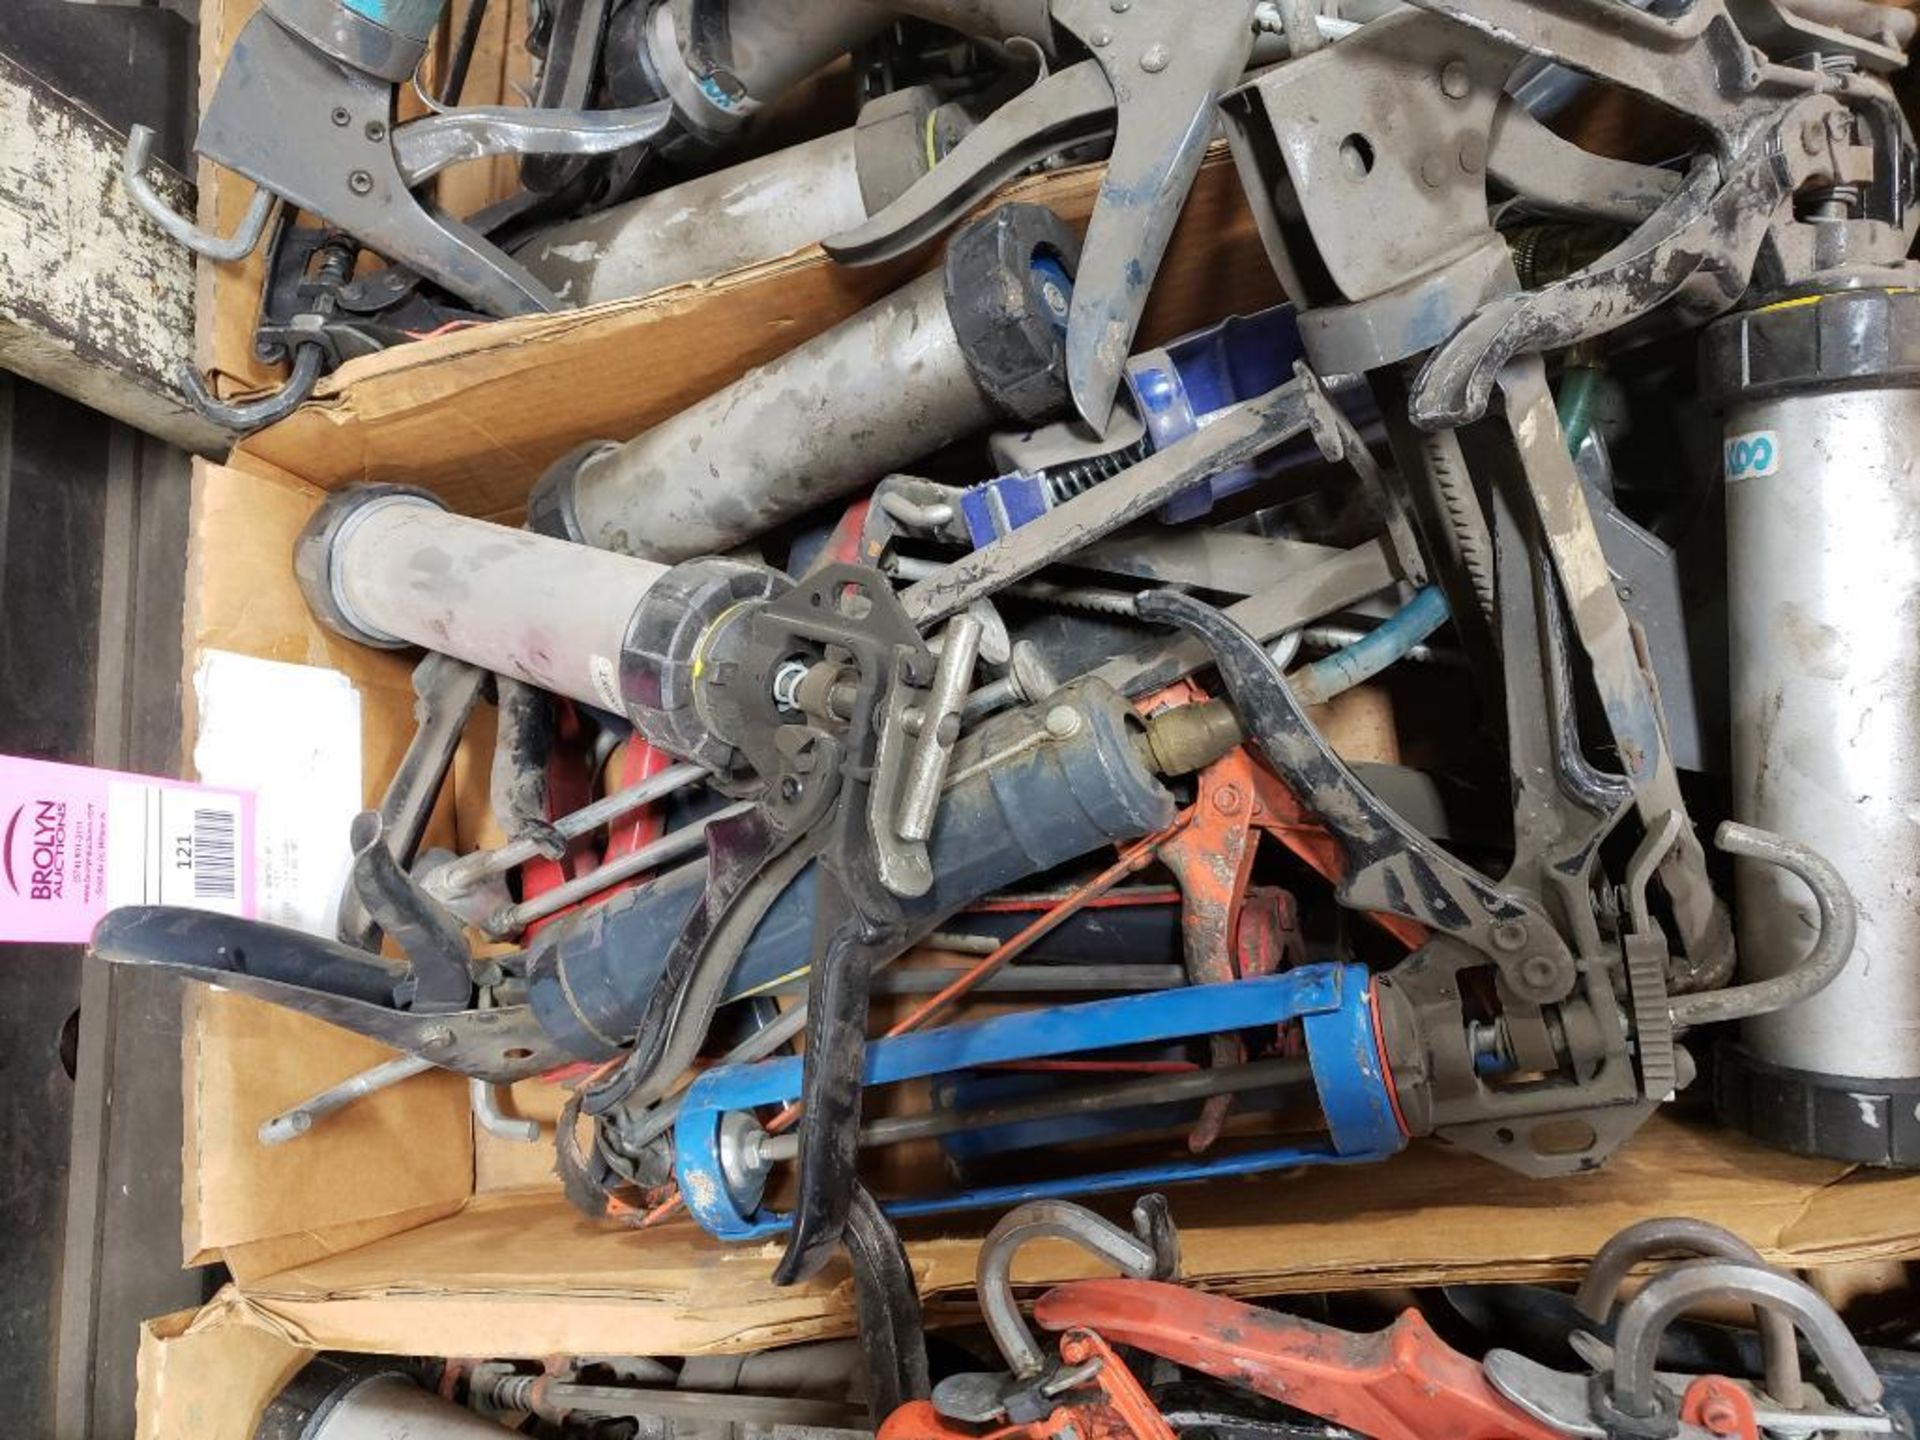 Large assortment of caulk and glue guns.